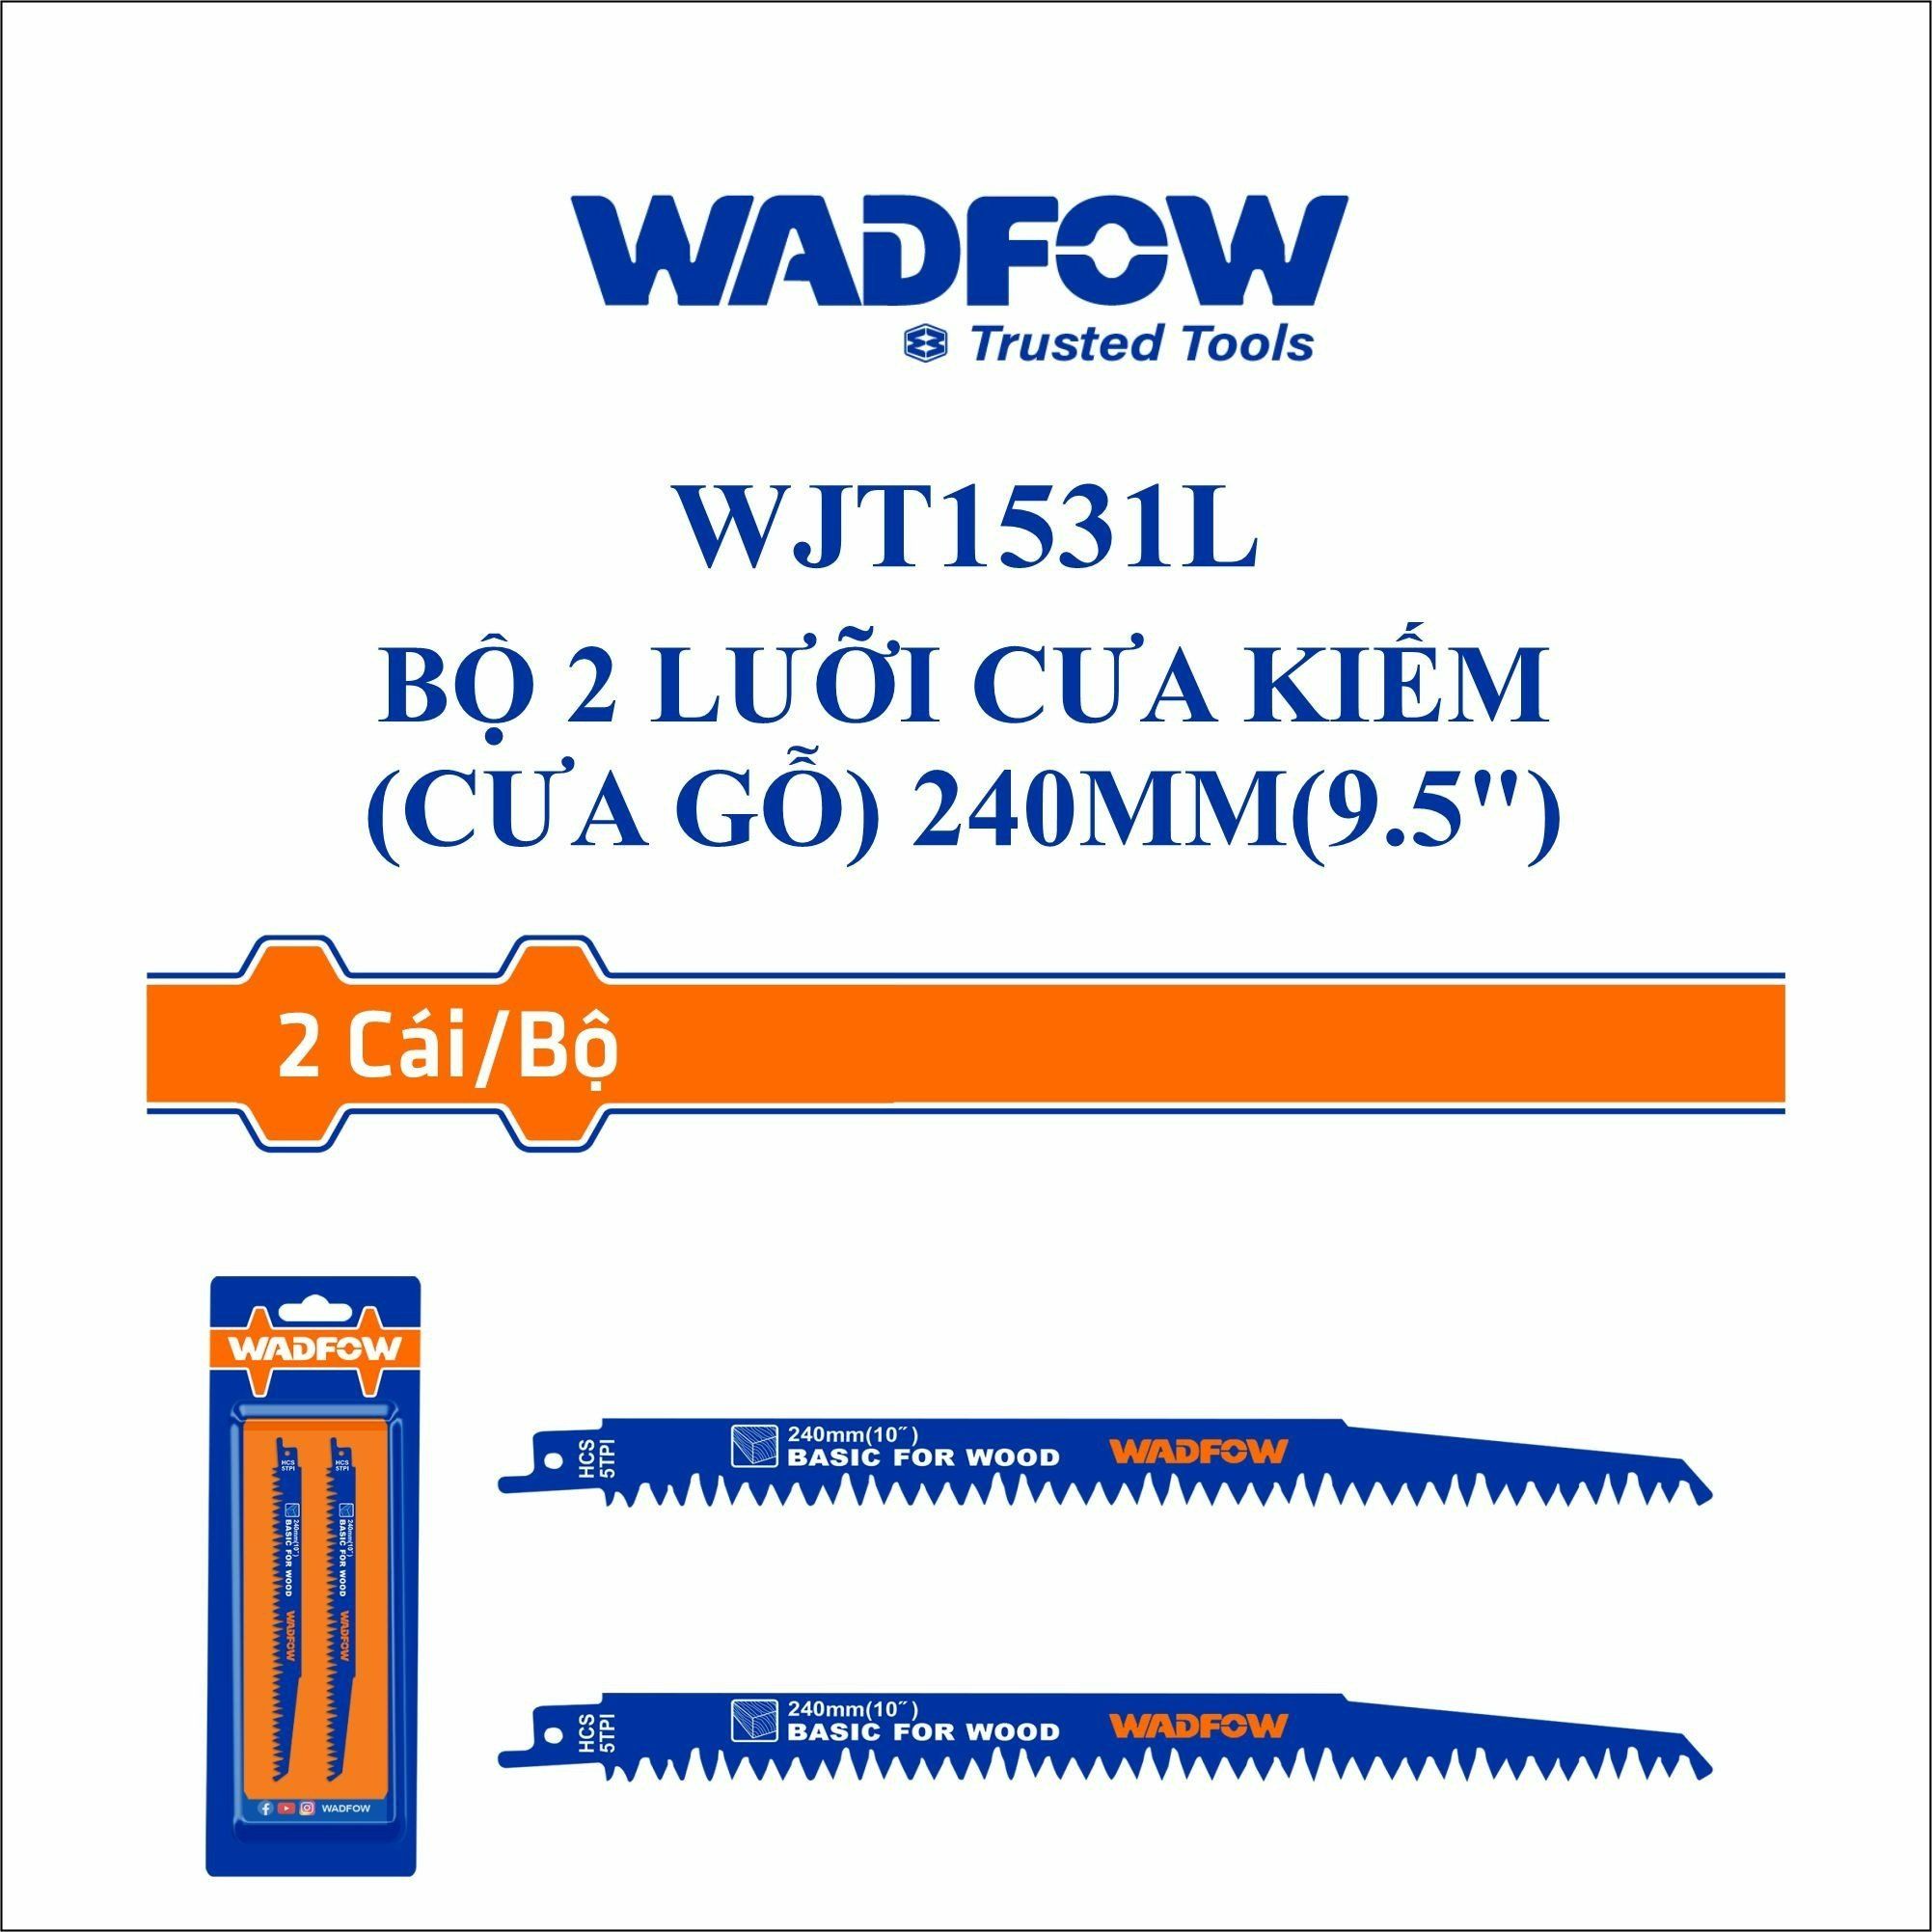  Bộ 2 lưỡi cưa kiếm (cưa gỗ) 240mm(9.5") WADFOW WJT1531L 